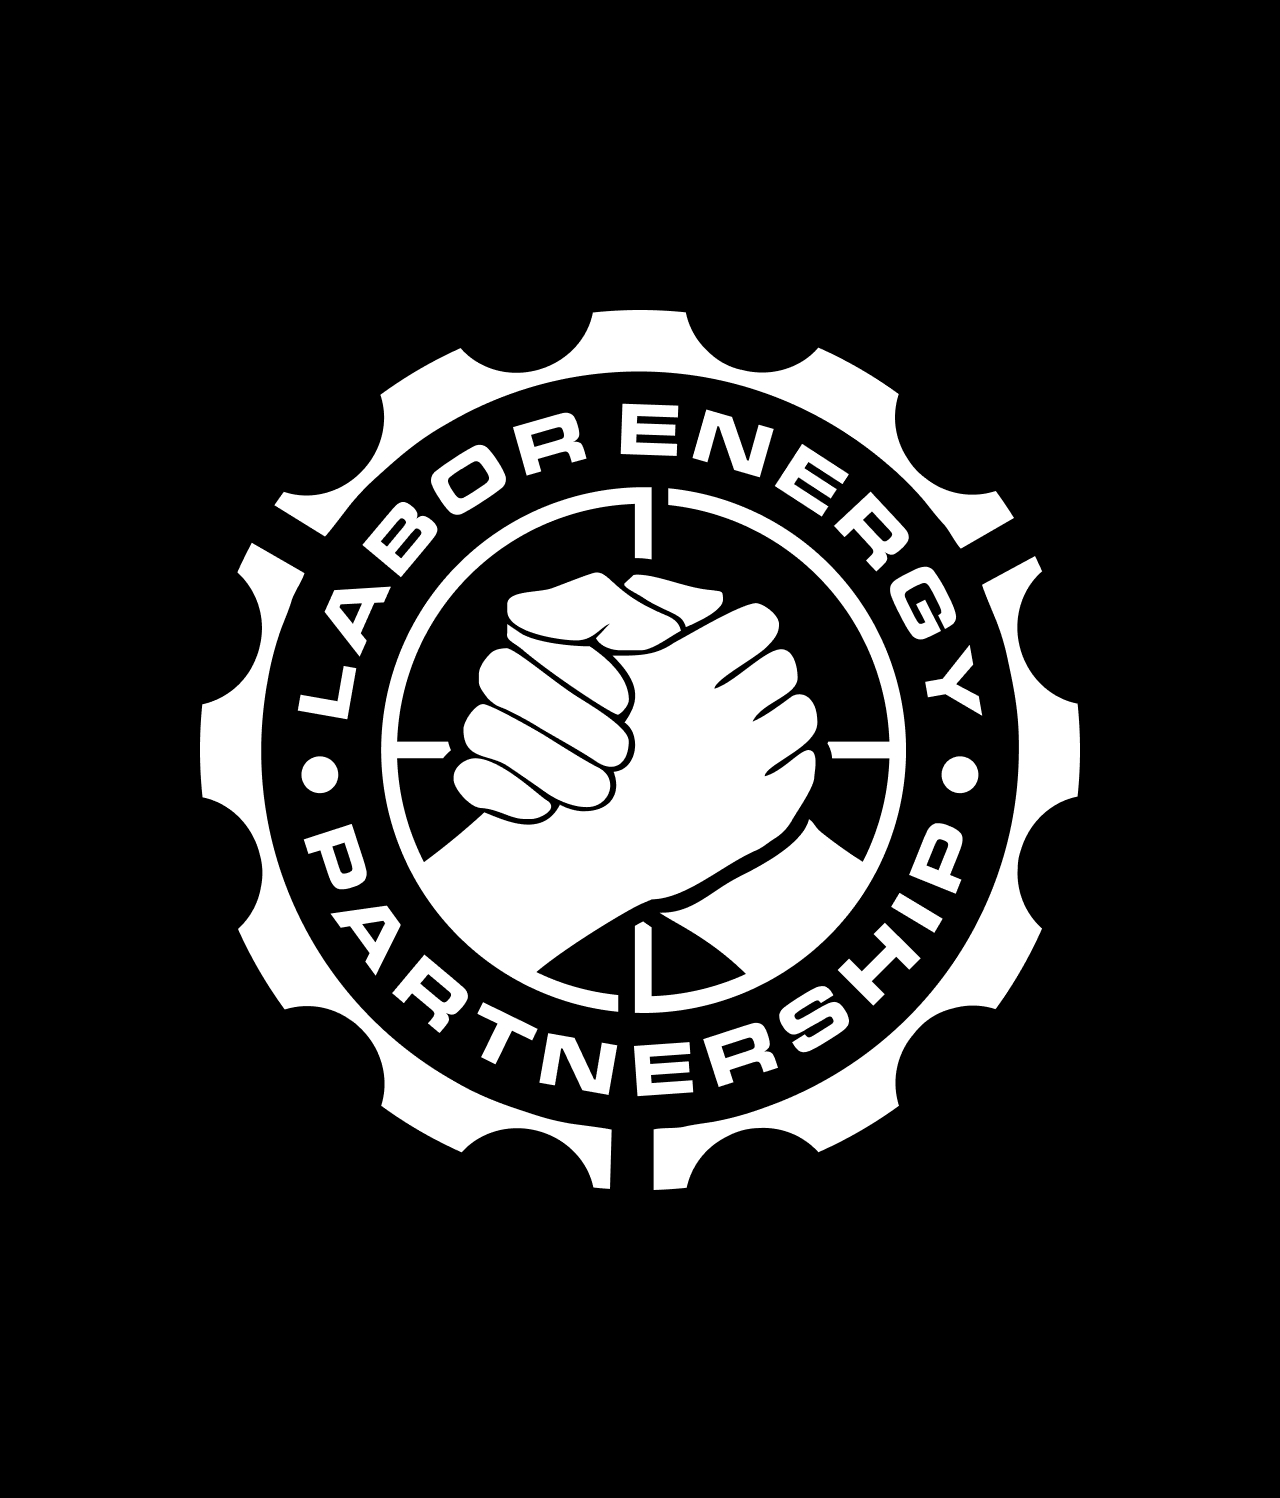 Labor Energy Partnership logo